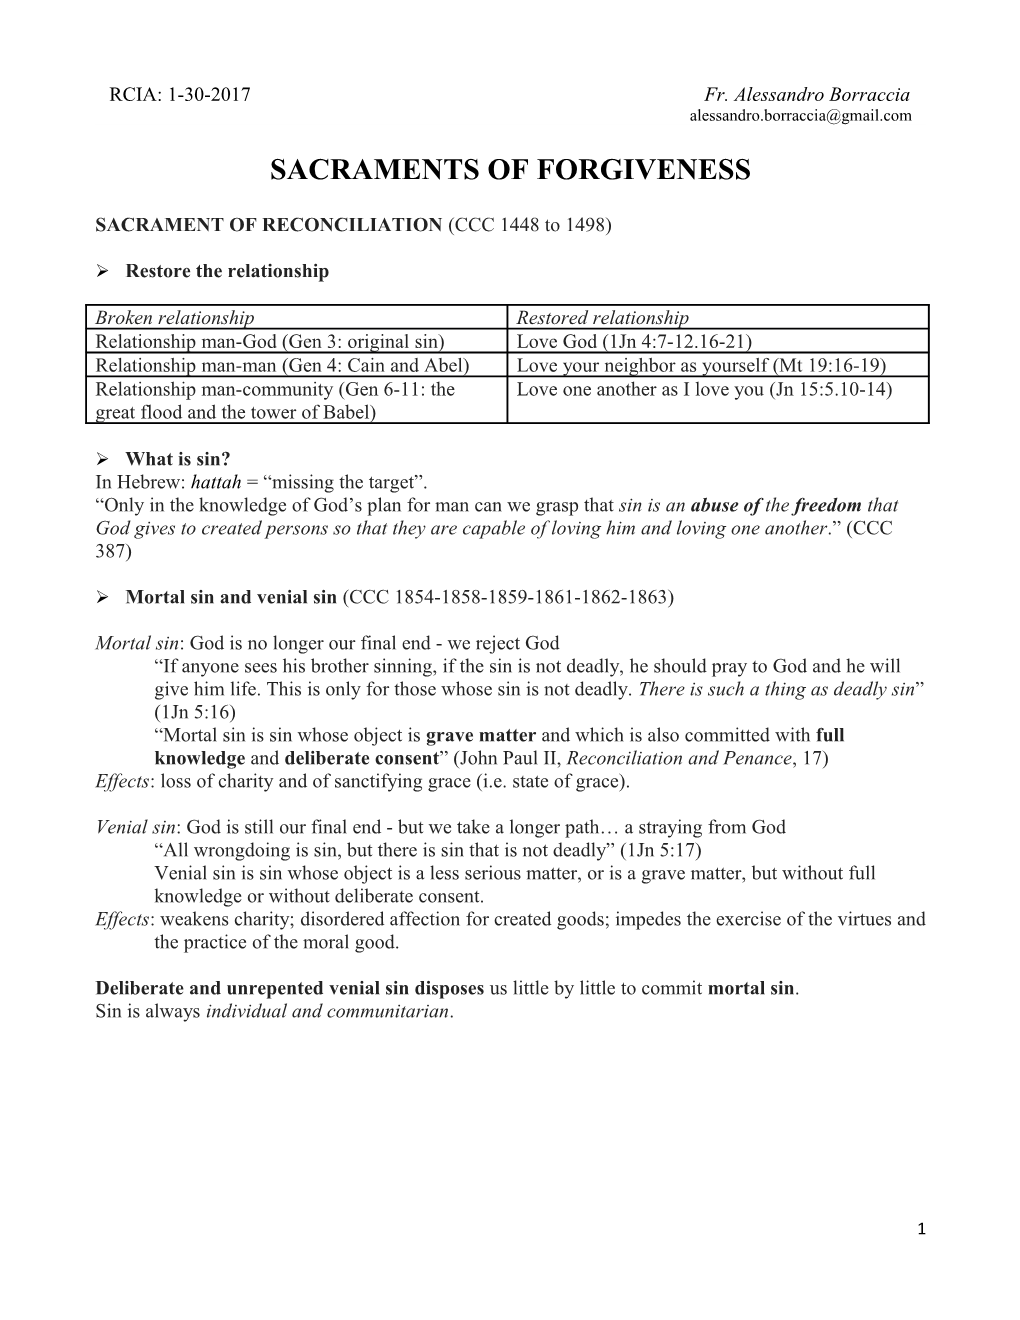 Sacraments of Forgiveness